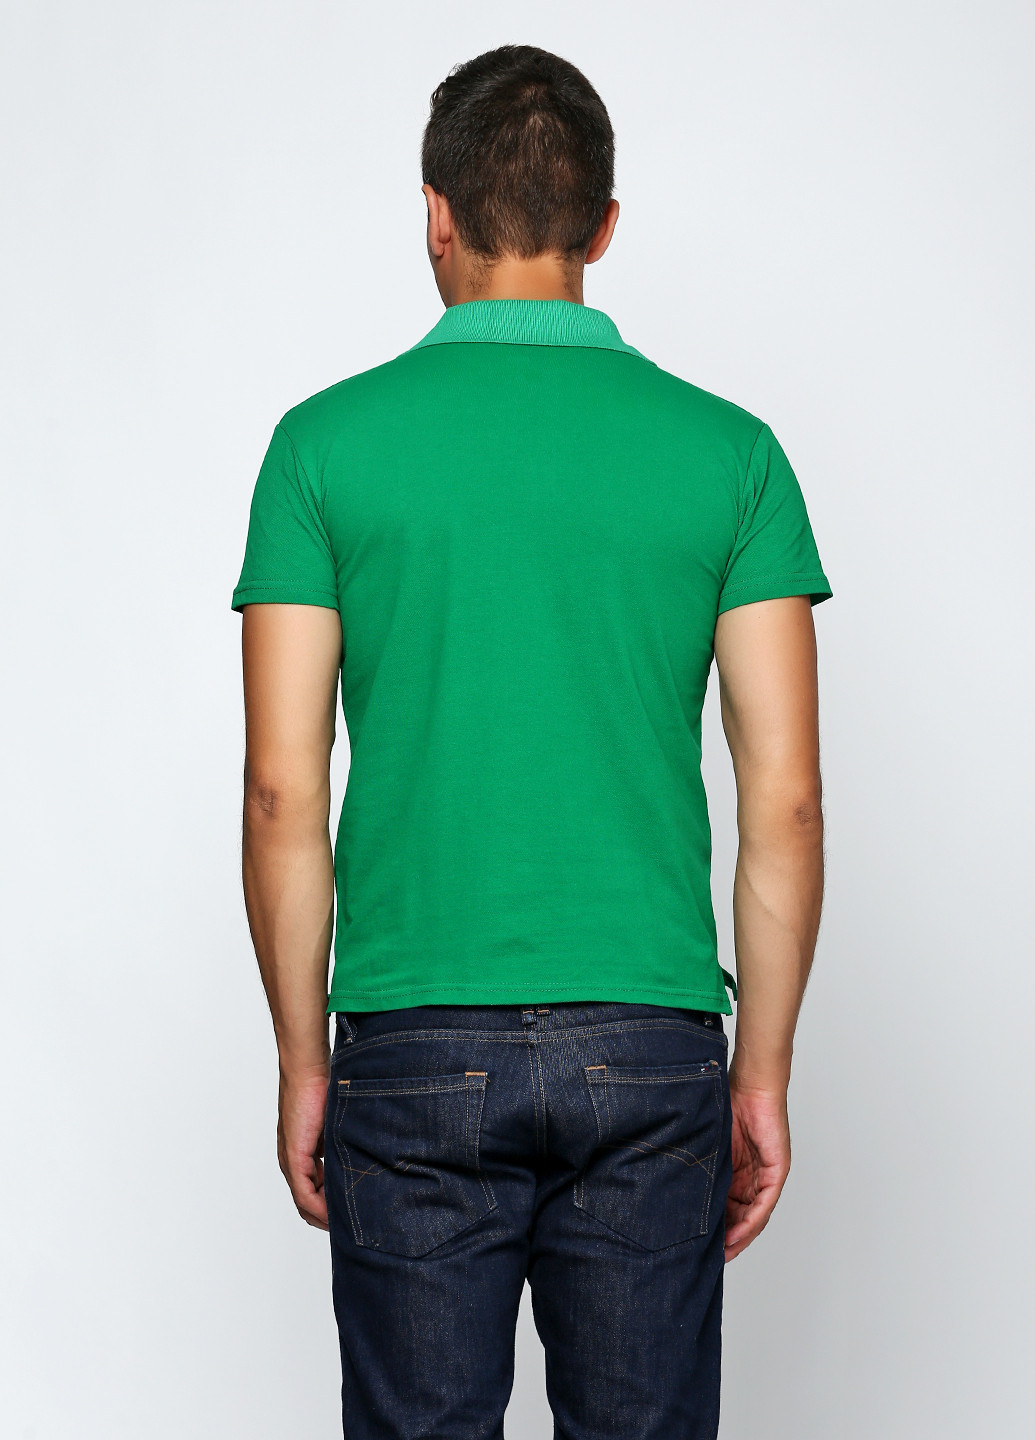 Зеленая футболка-поло для мужчин Роза однотонная